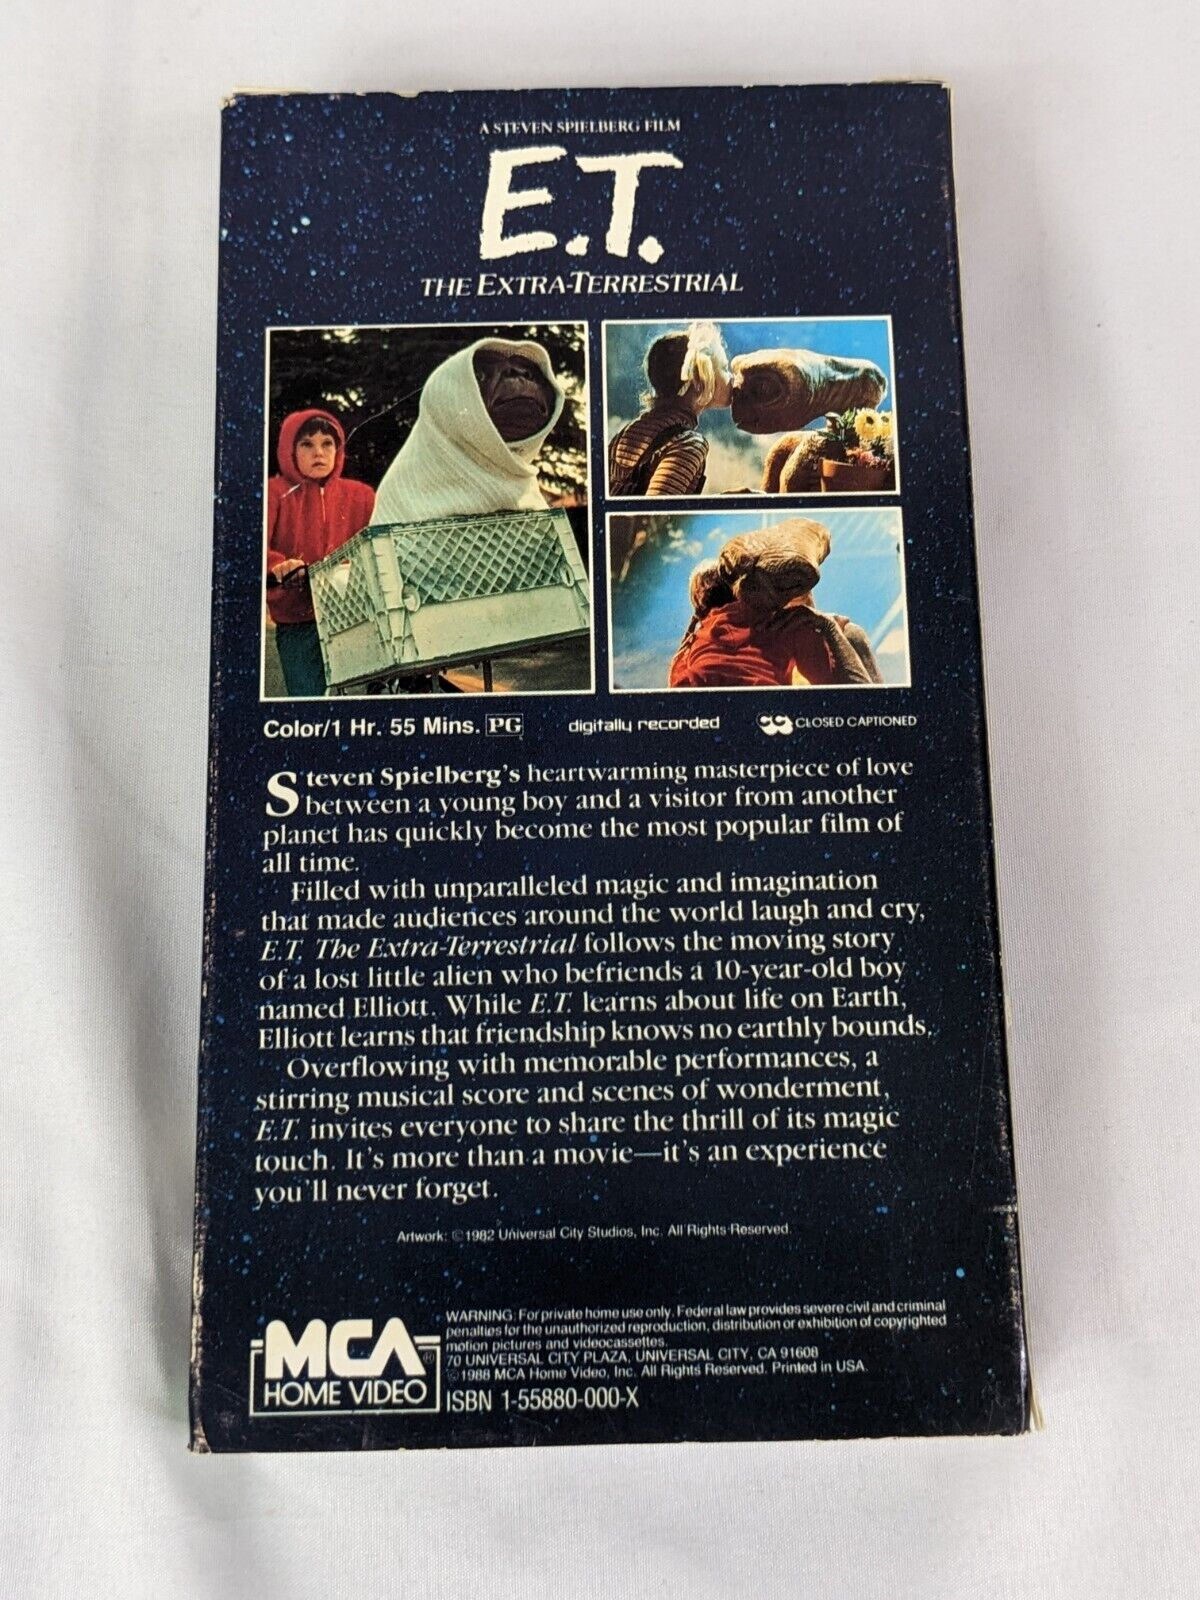 E.T. The Extra-Terrestrial ET Green Flap Steven Spielberg Film VHS Hi-Fi Stereo